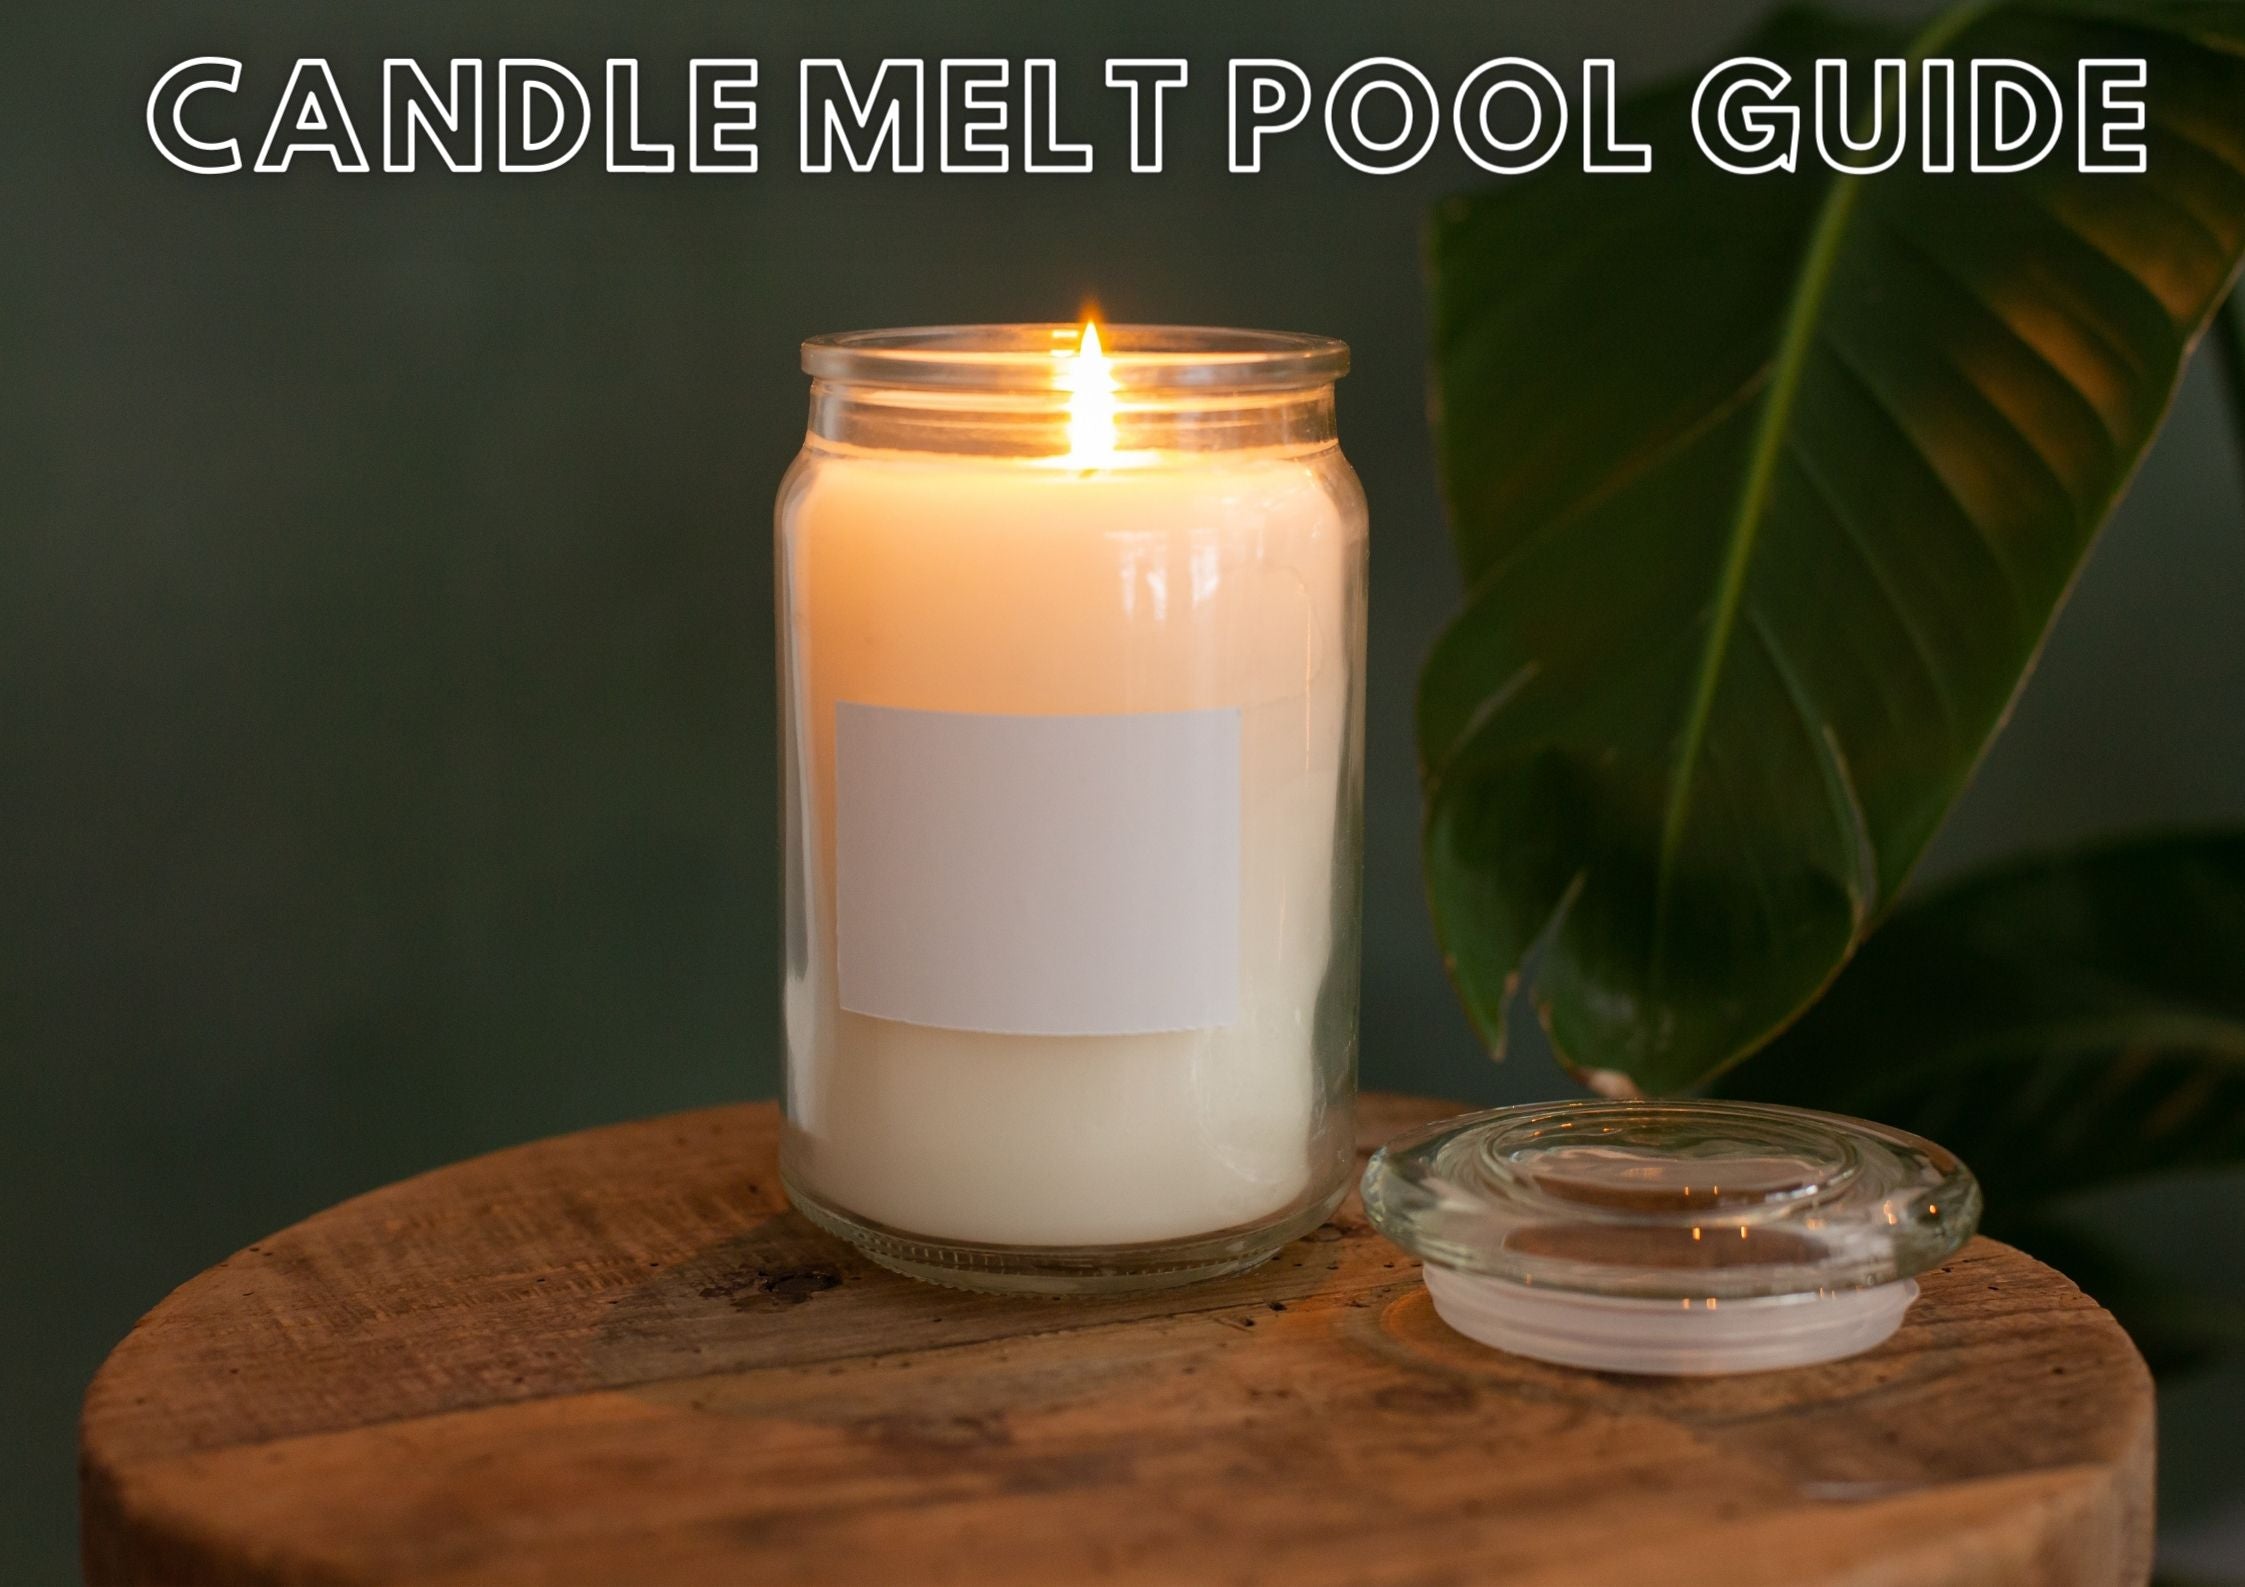 Candle full melt pool - Full guide